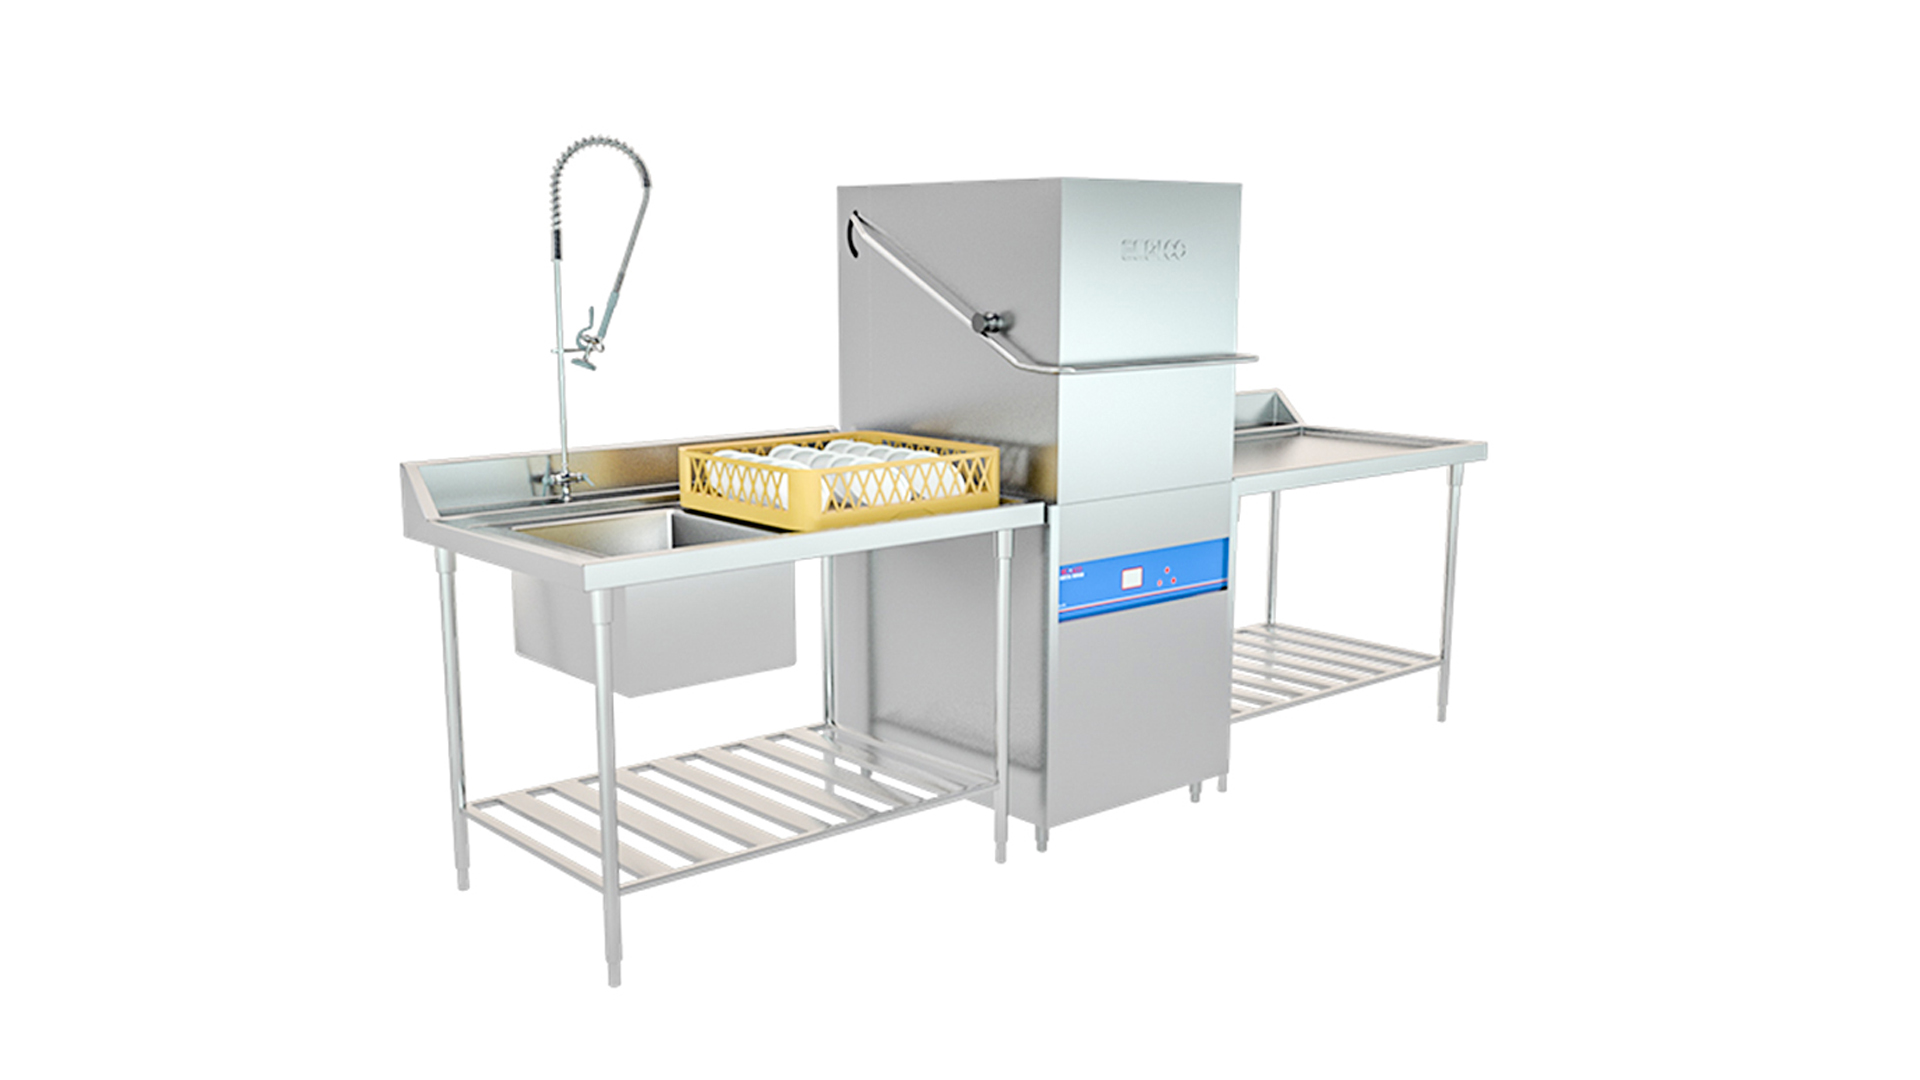 यूएसए ईसीओ ब्रांड कमर्शियल कवर ओपनिंग डिश वाशिंग मशीन / रेस्तरां के लिए डिश वॉशर